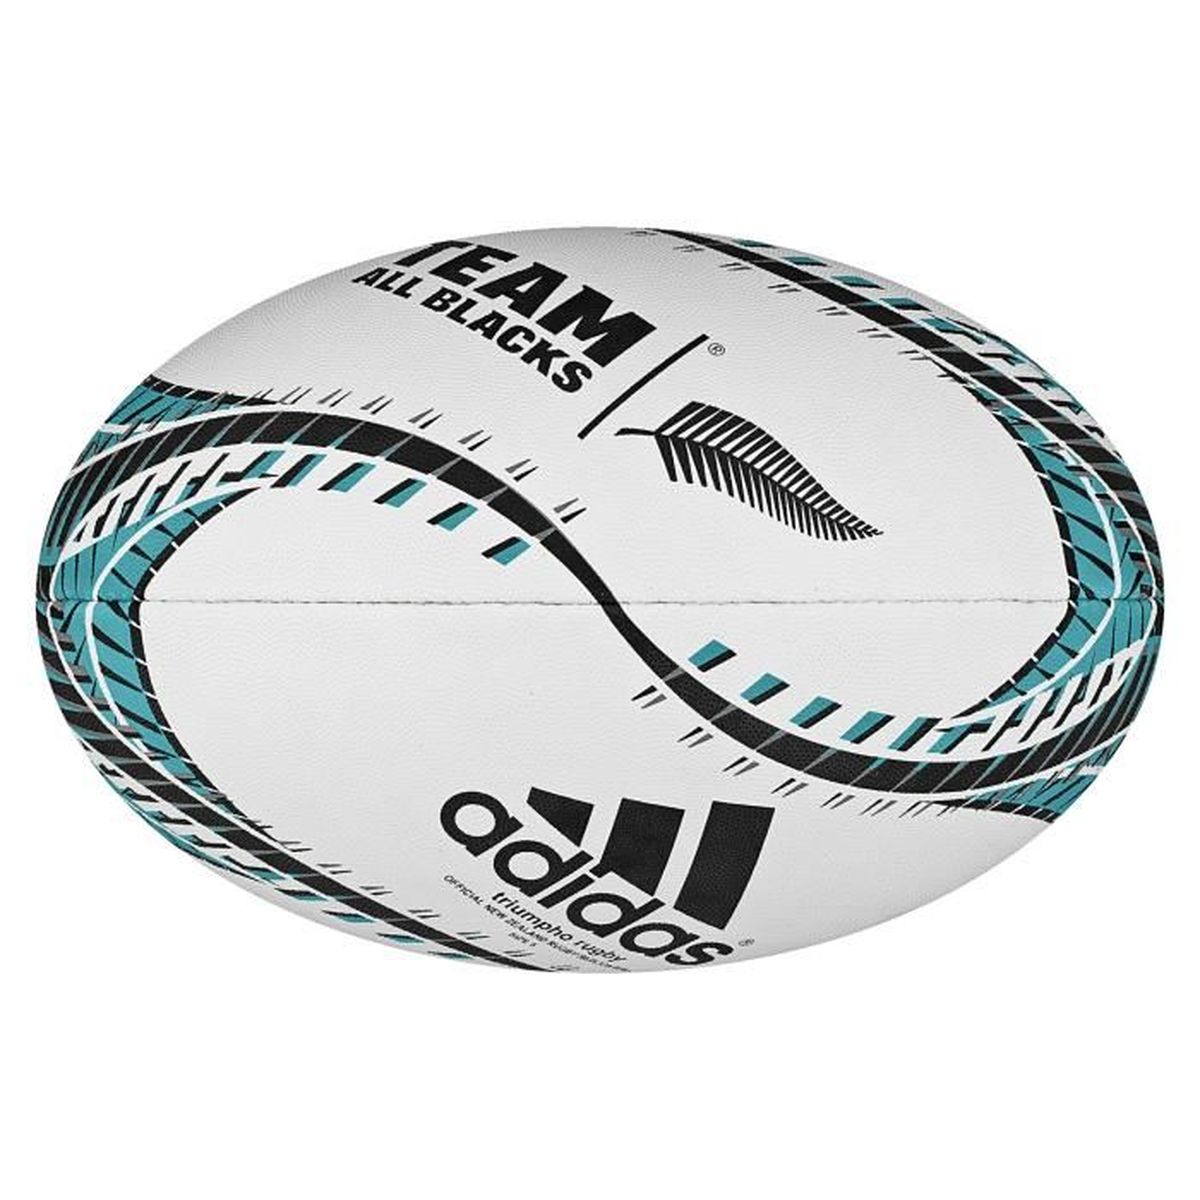  Ballon  Rugby adidas All  Blacks  Blanc Cdiscount Sport